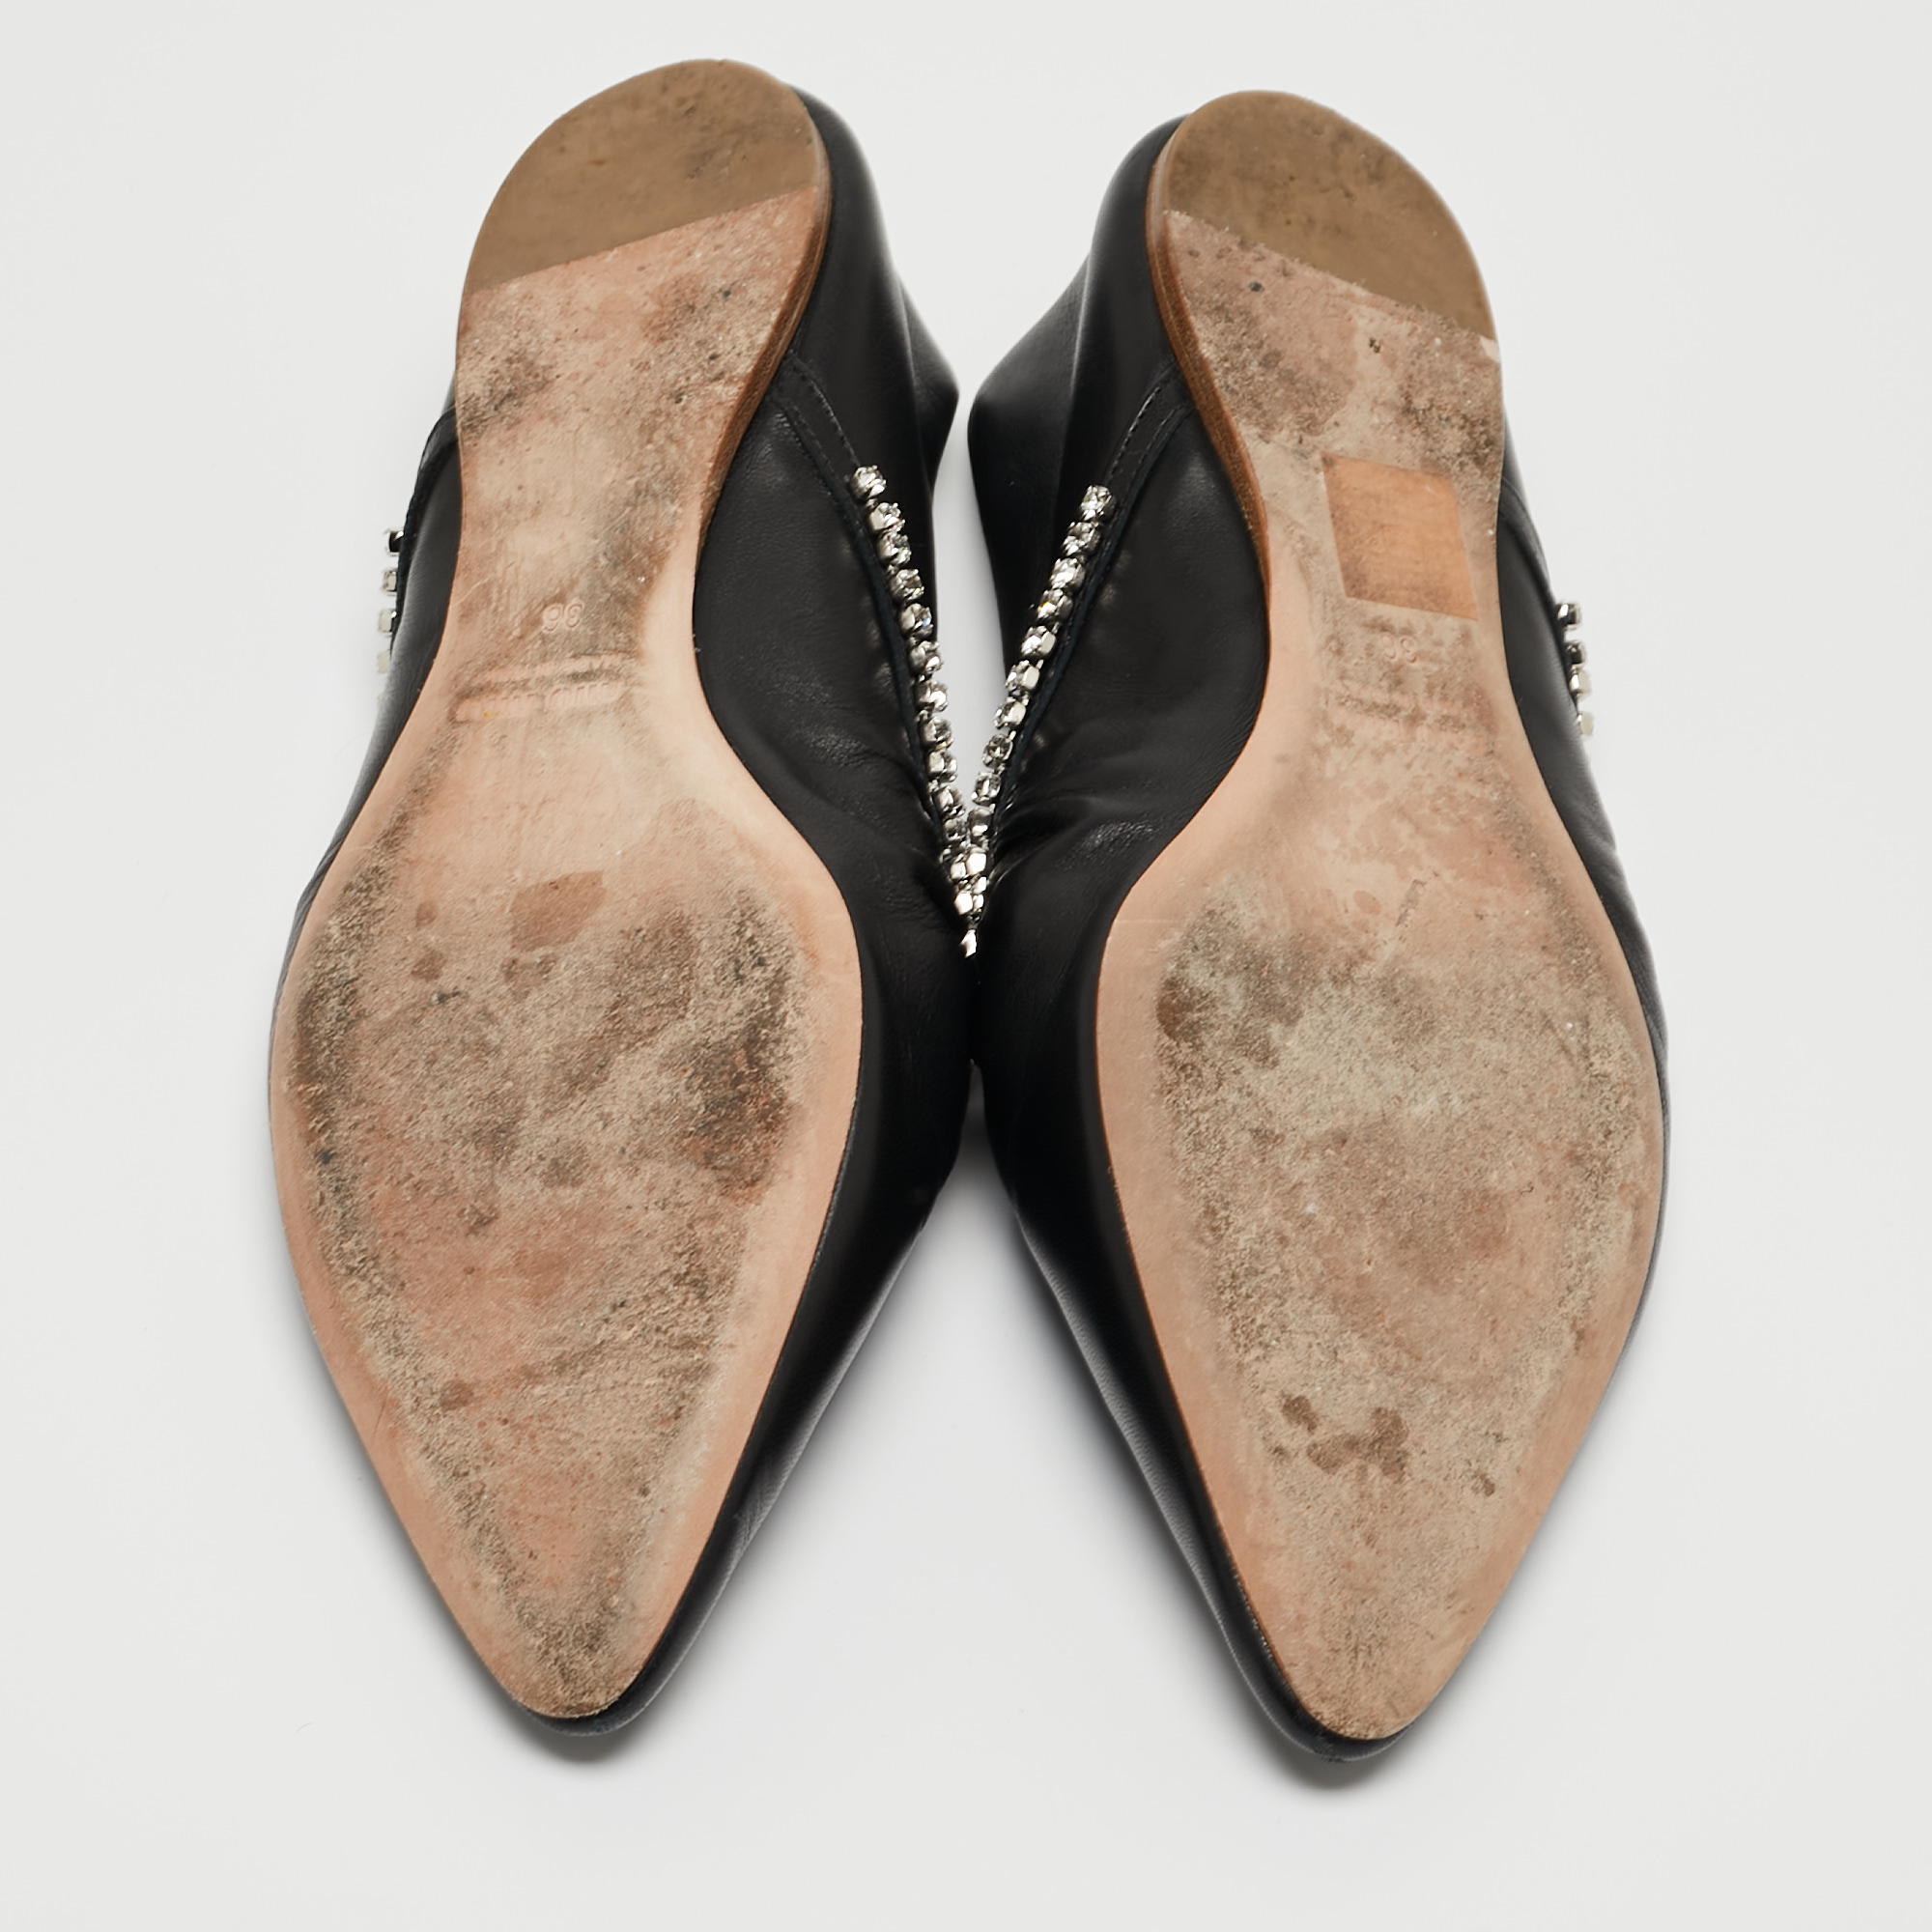 Miu Miu Black Leather Crystal Embellished Pointed Toe Ballet Flats Size 36